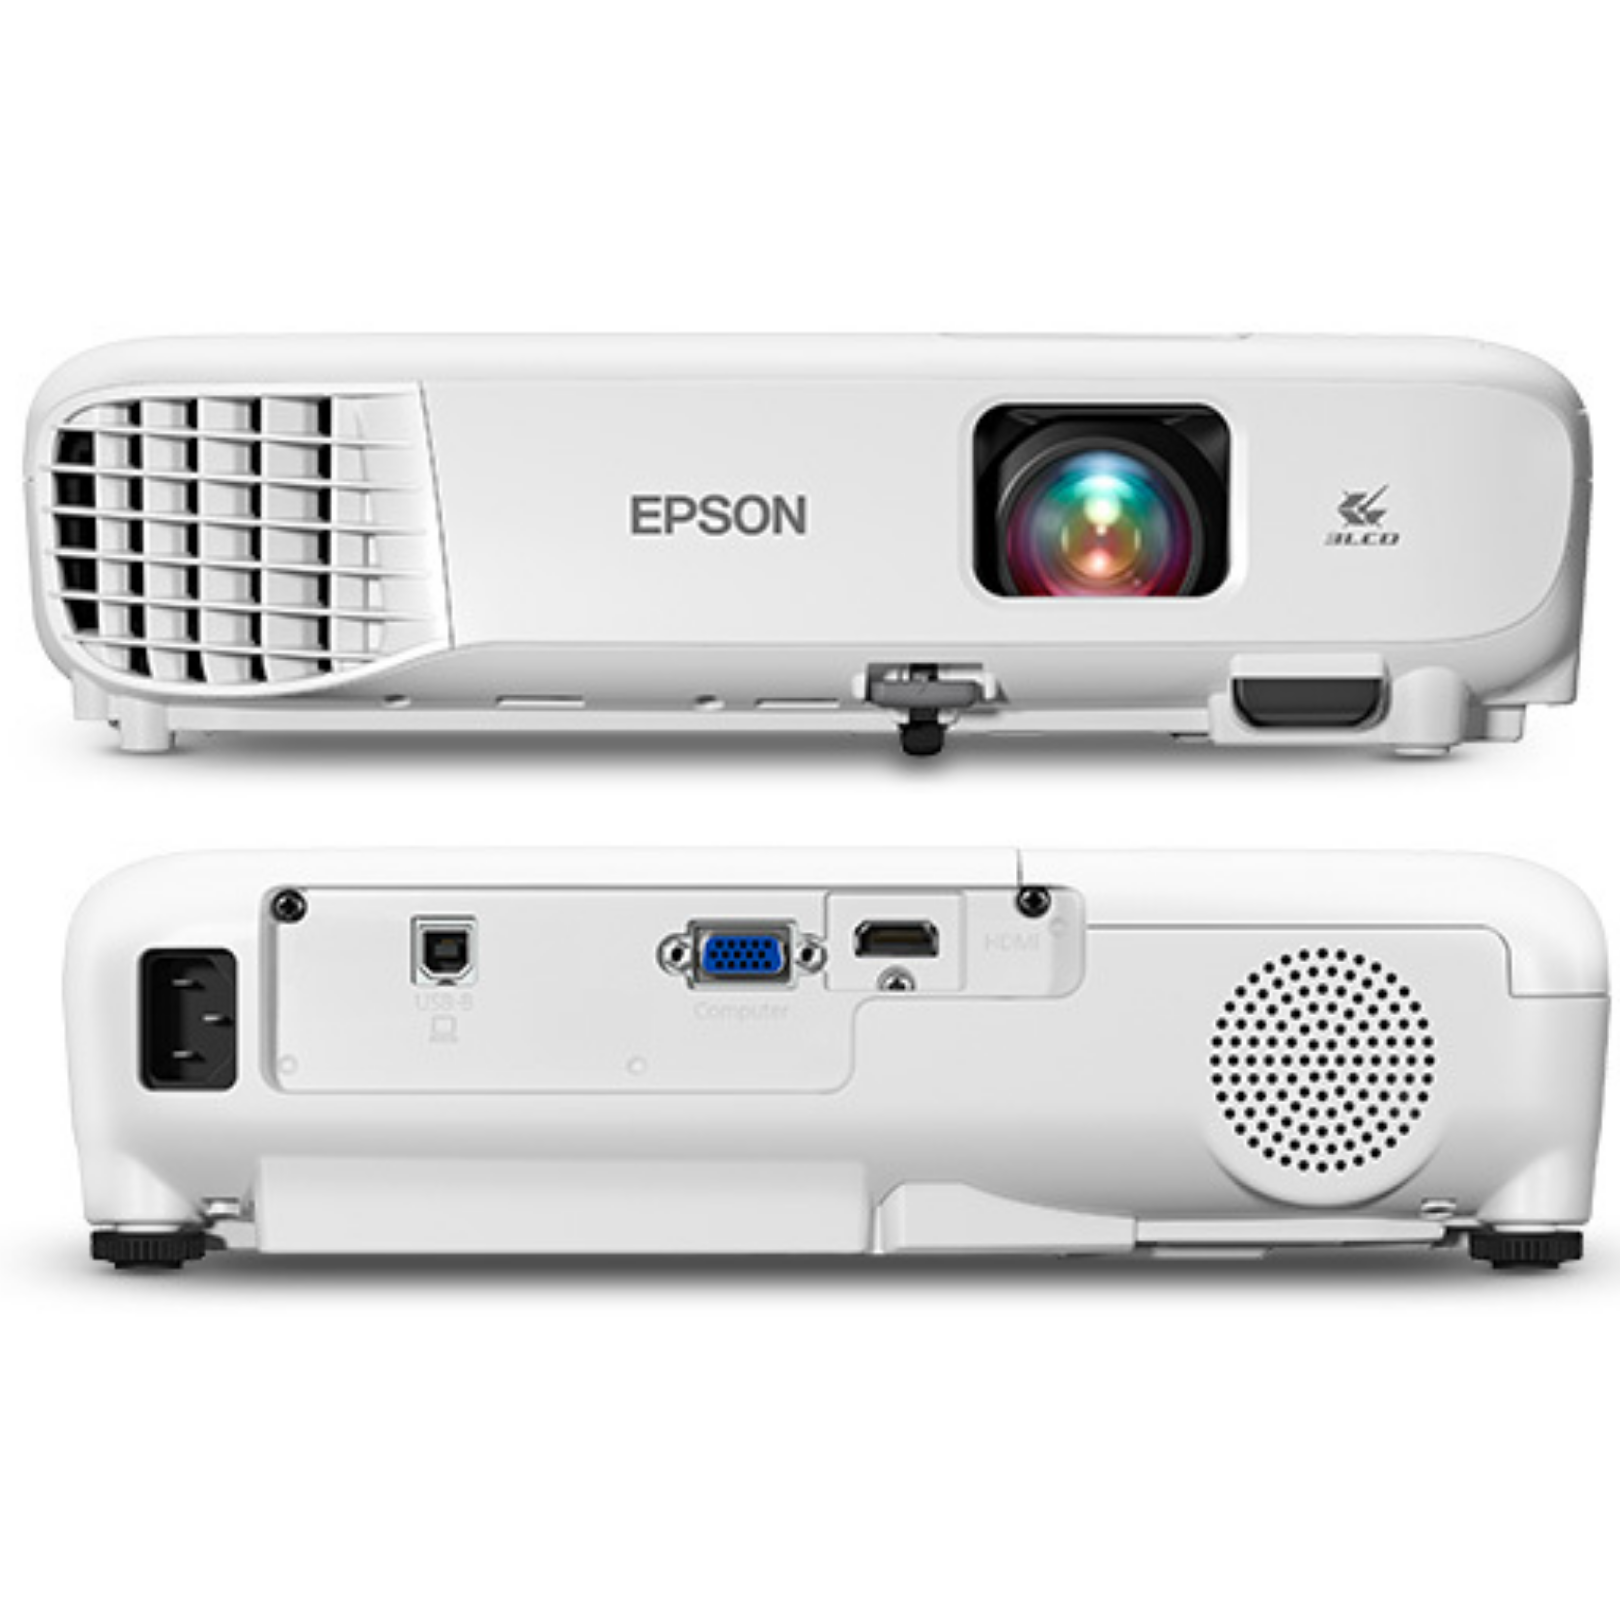  Proyector Epson VS260 3300 Lumens XGA (1024x768) 3LCD HDMI